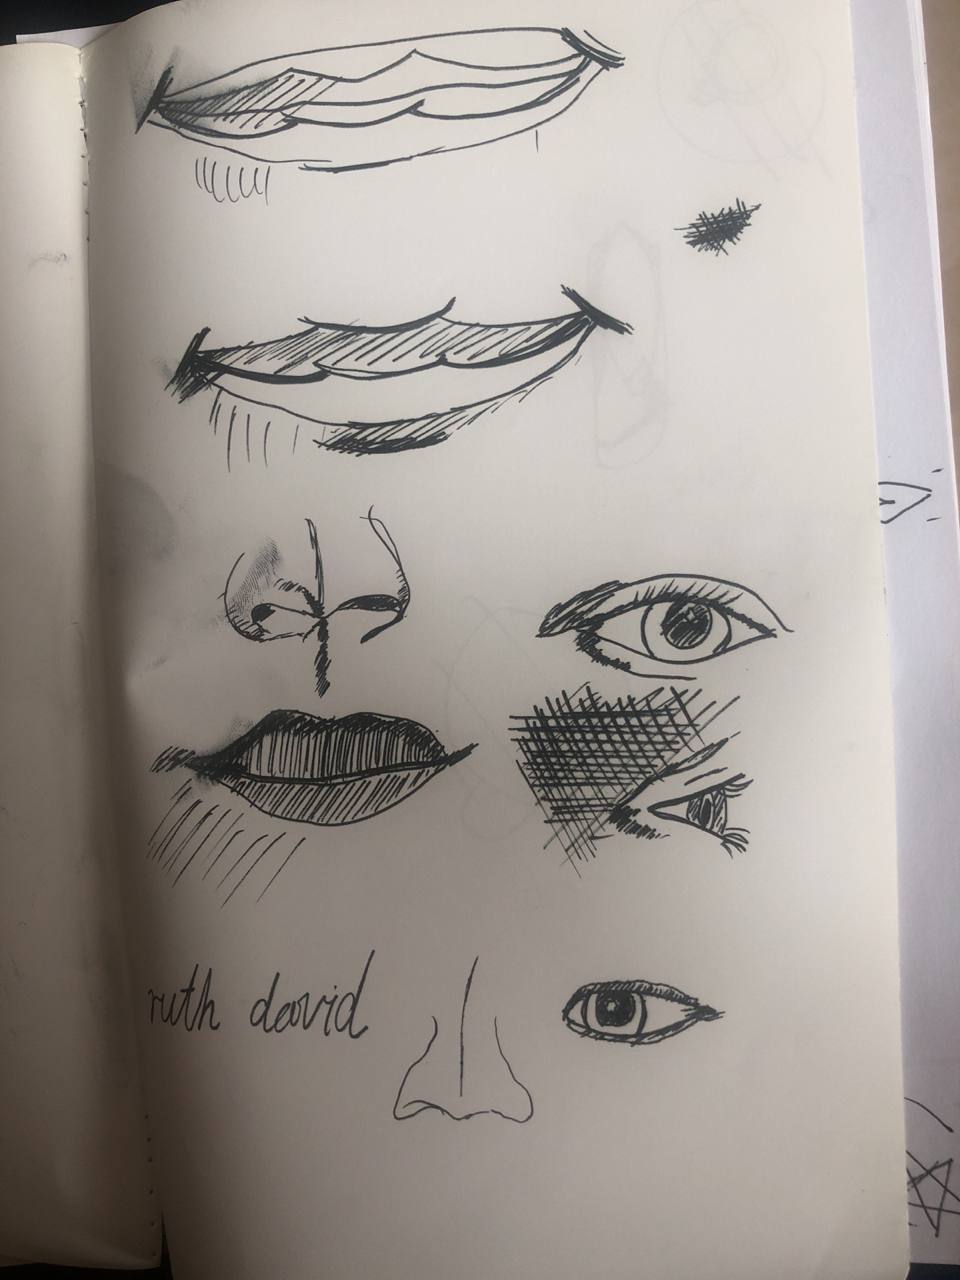 First "eye" freehand sketch